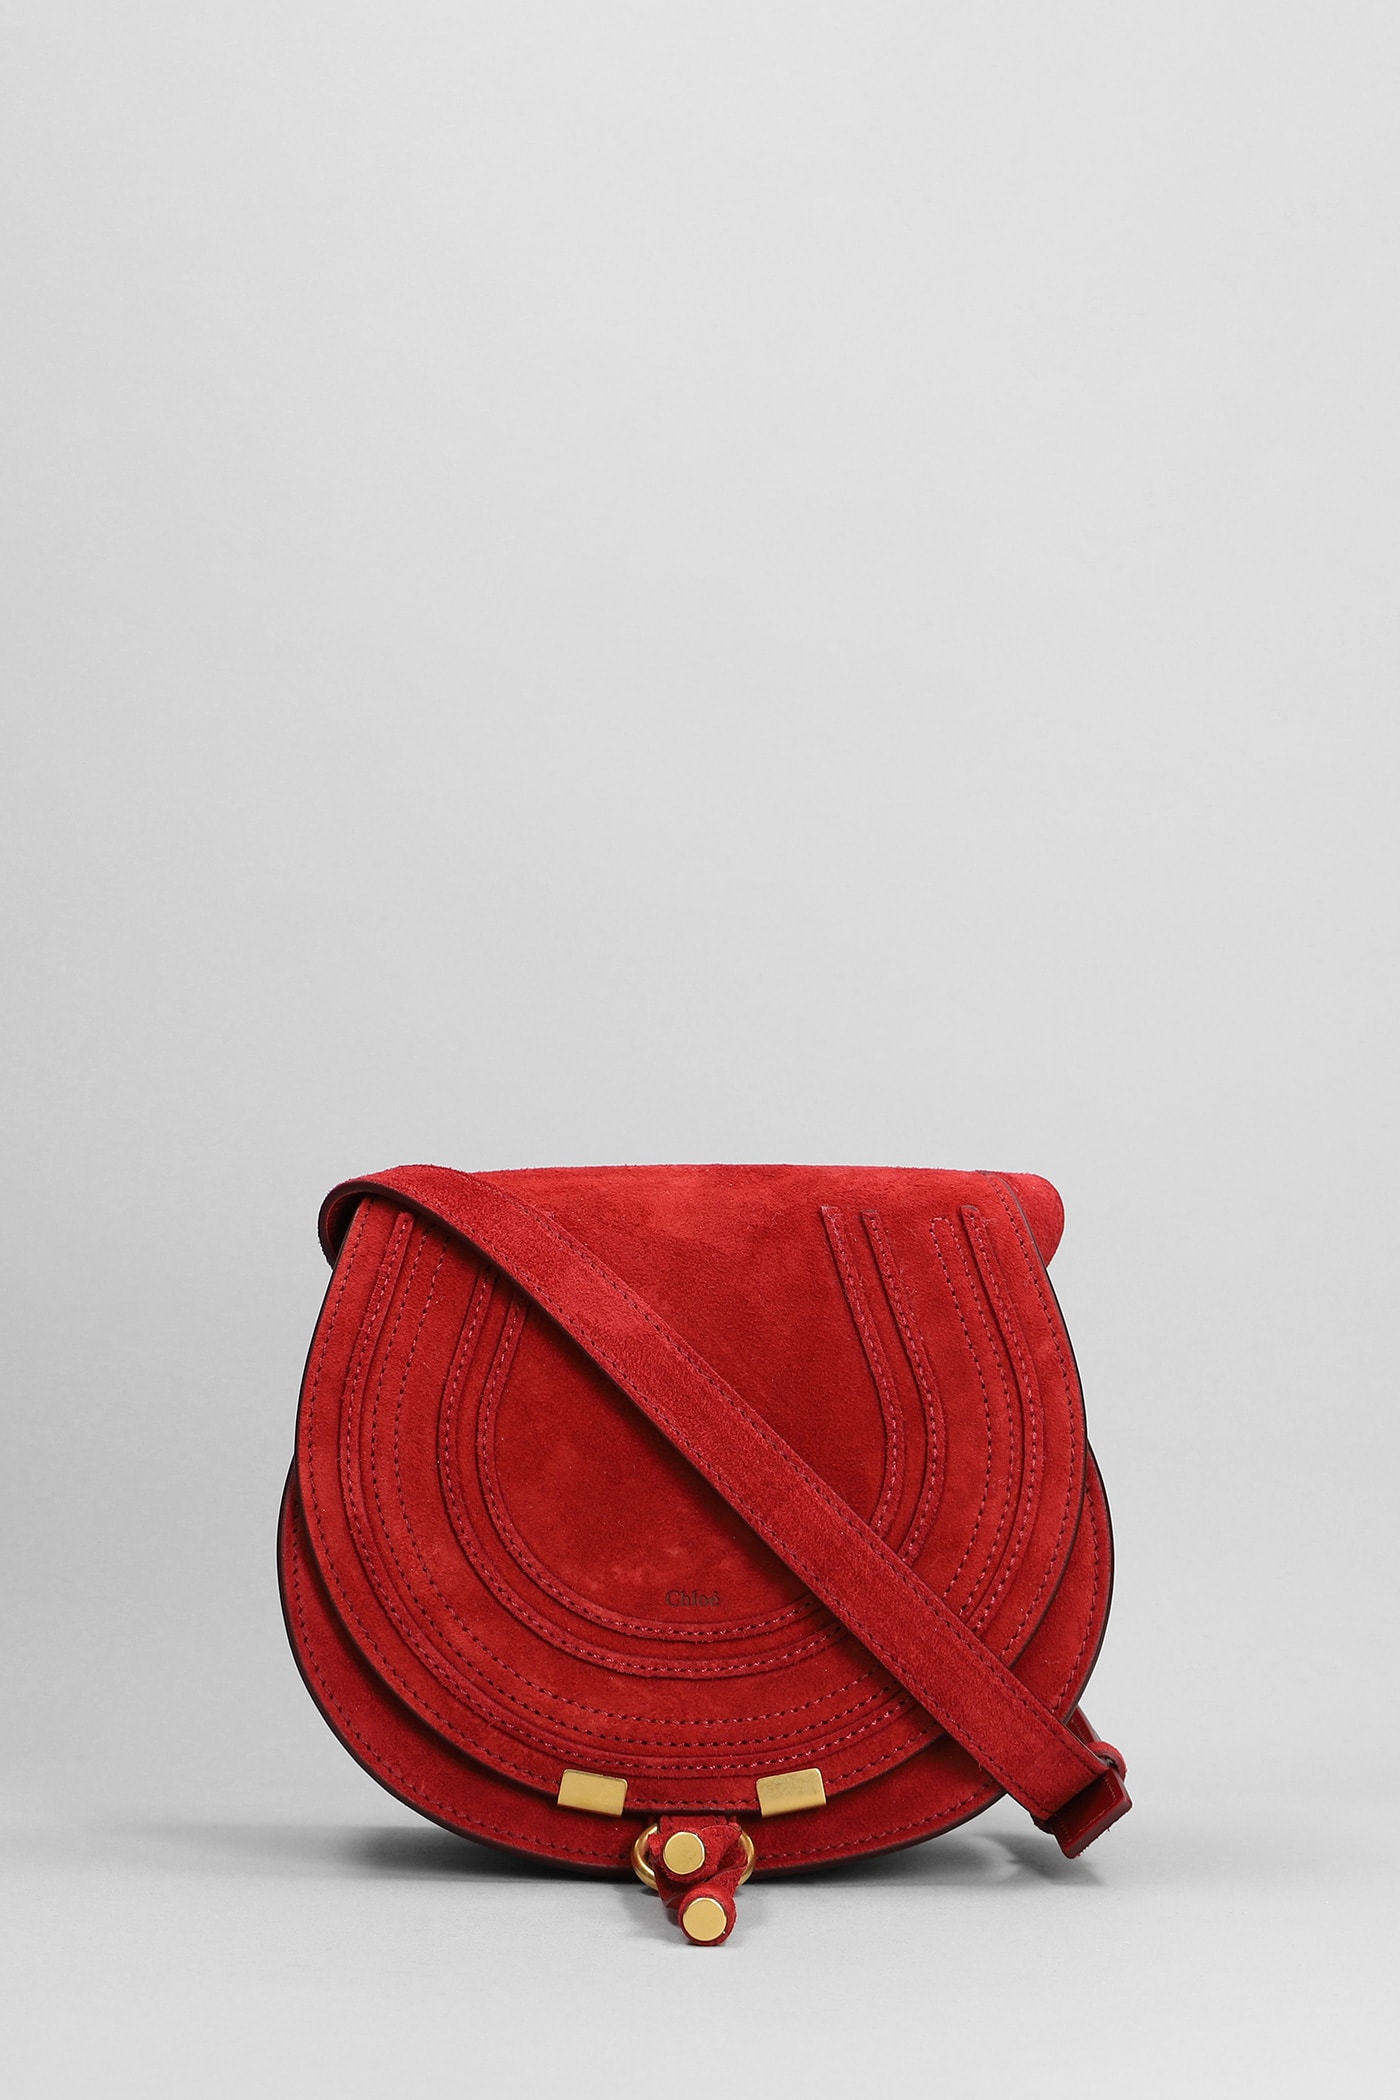 Chloé Mercie Shoulder Bag In Red Suede